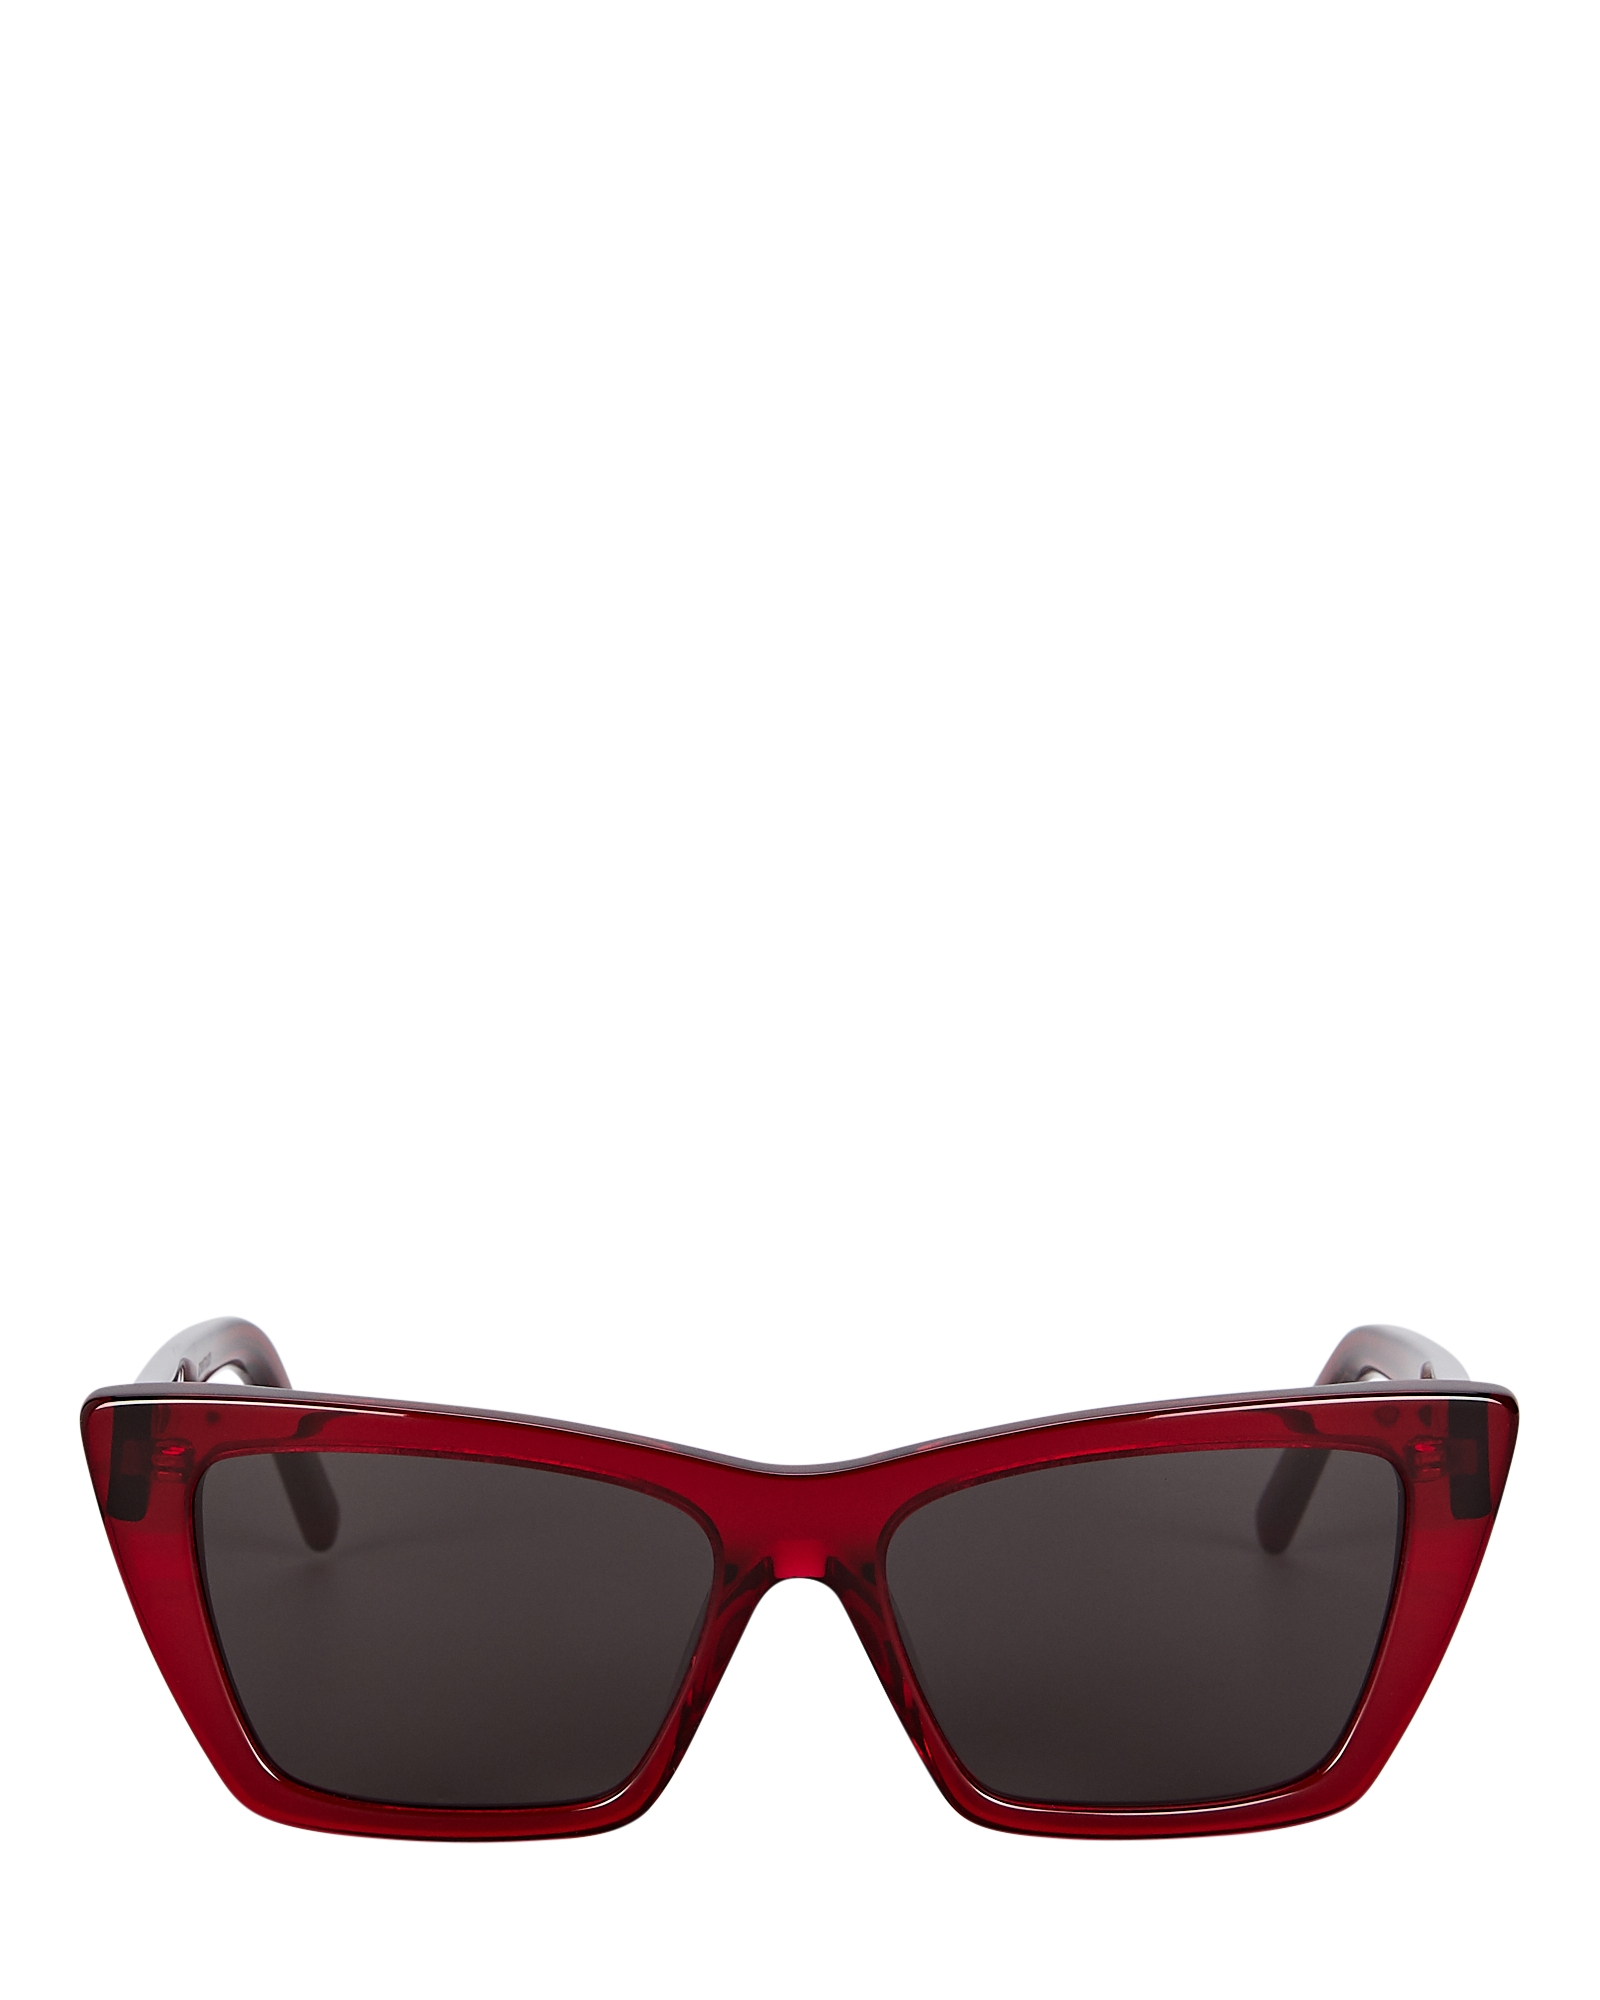 Saint Laurent Mica Cat Eye Sunglasses | INTERMIX®